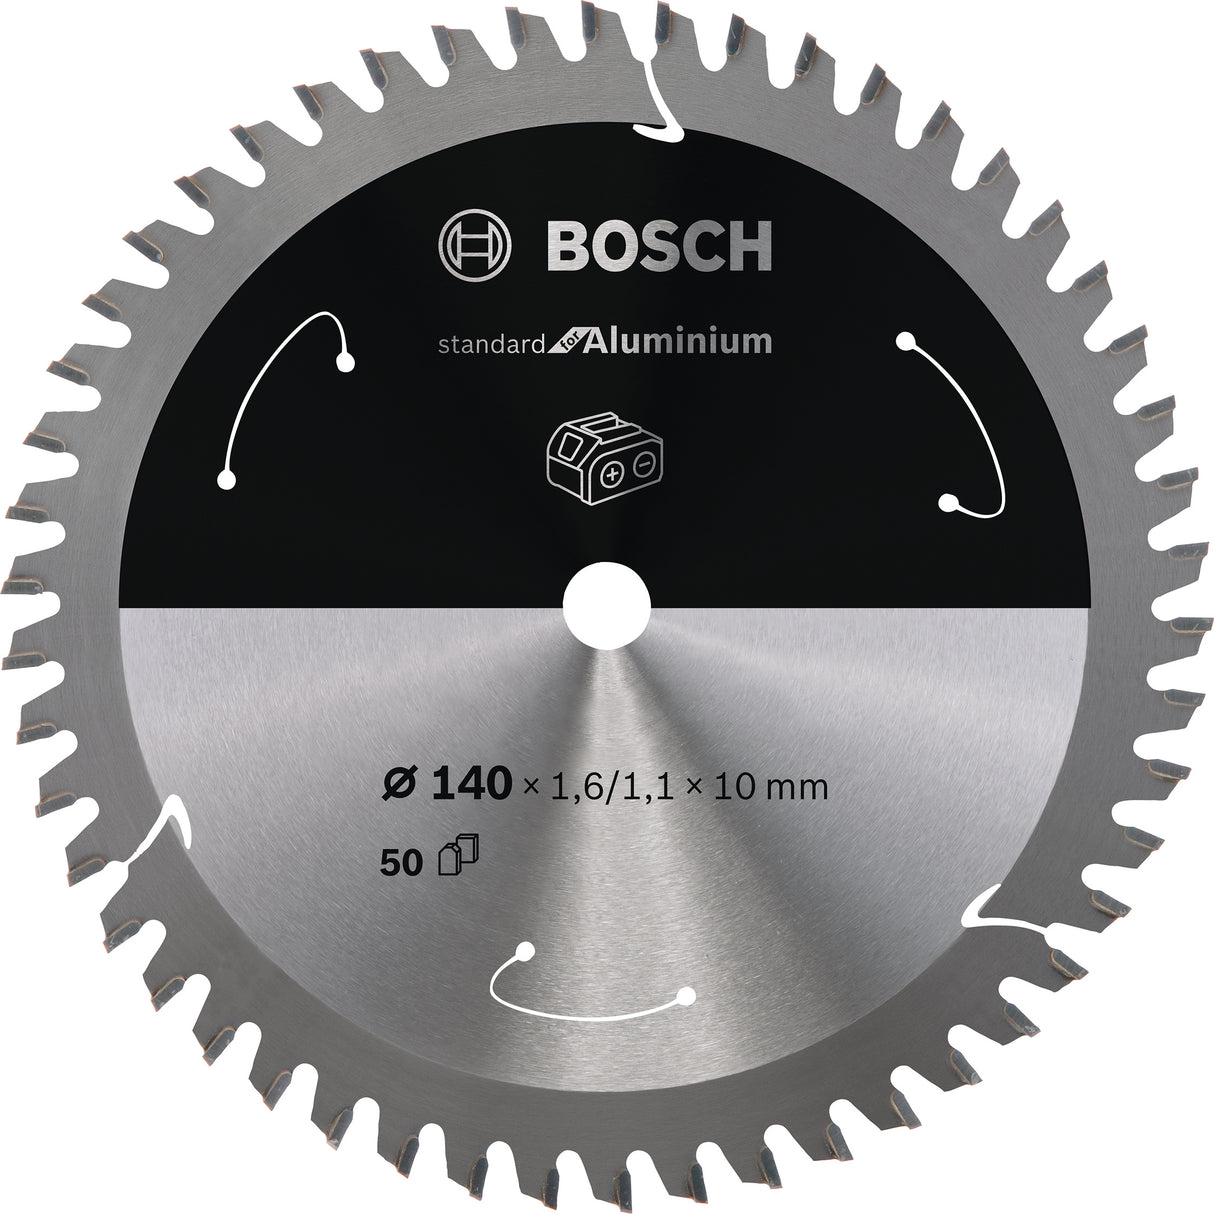 Bosch Professional Aluminium Circular Saw Blade for Cordless Saws - 140x1.6/1.1x10 T50 Standard